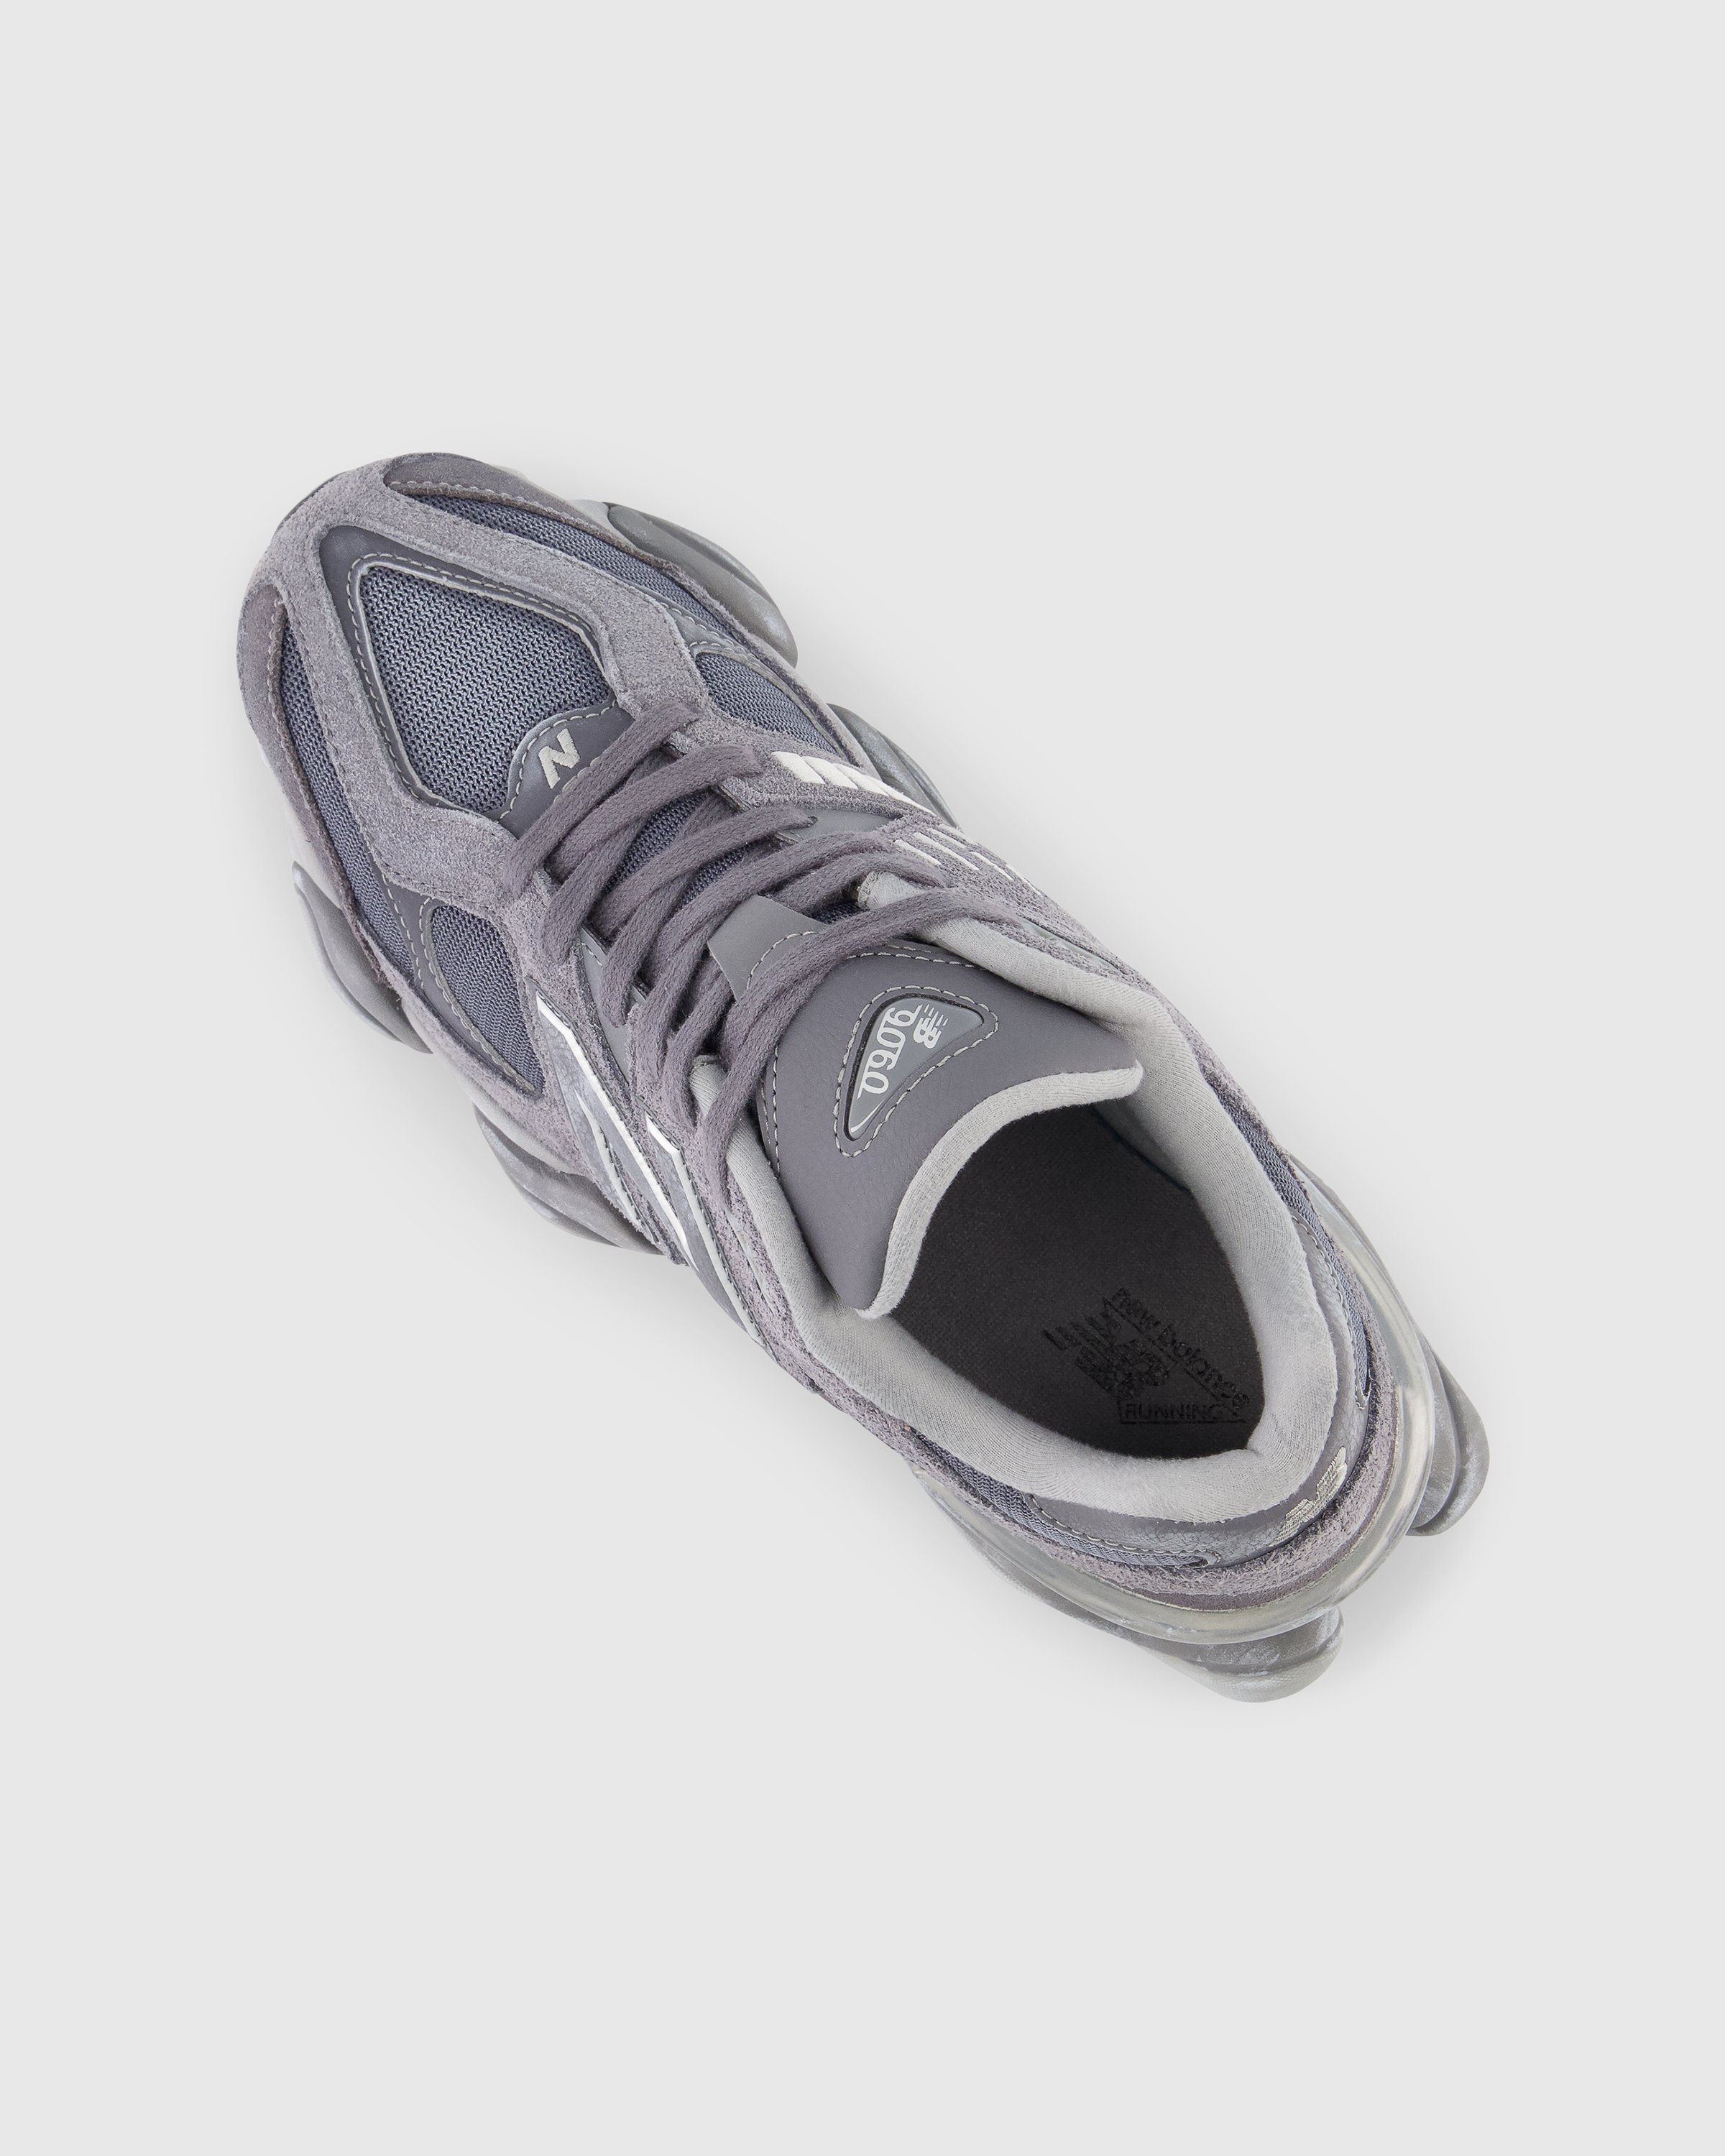 New Balance - U 9060 SG Magnet - Footwear - Grey - Image 4